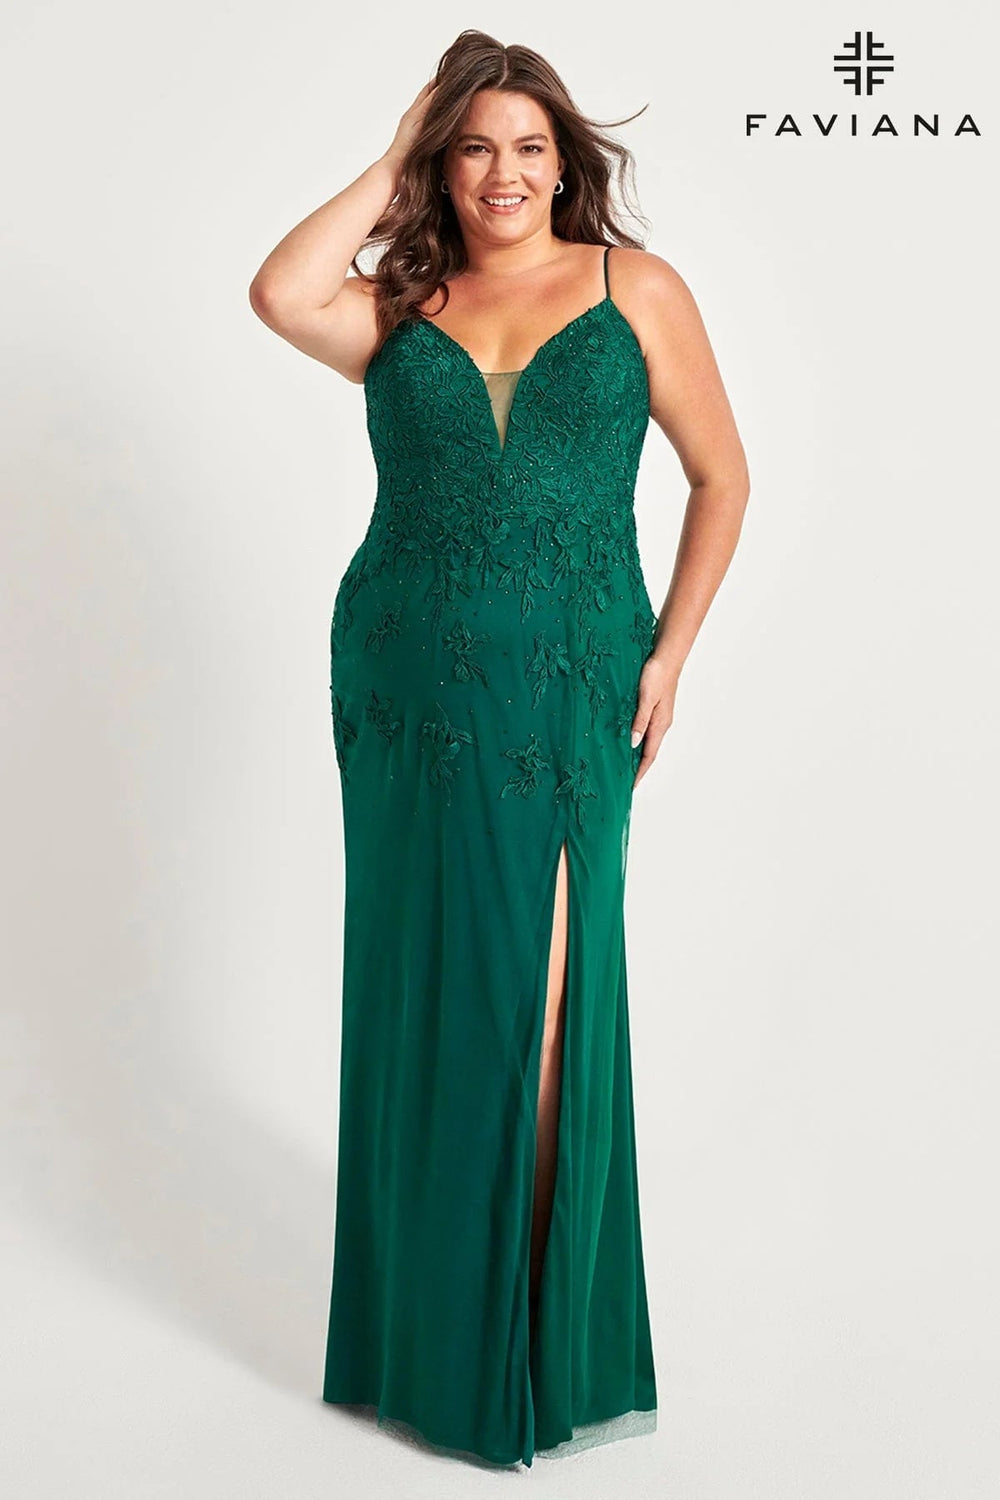 Faviana Evening Gown Copy of Plus Size FAVIANA 9535 Dress